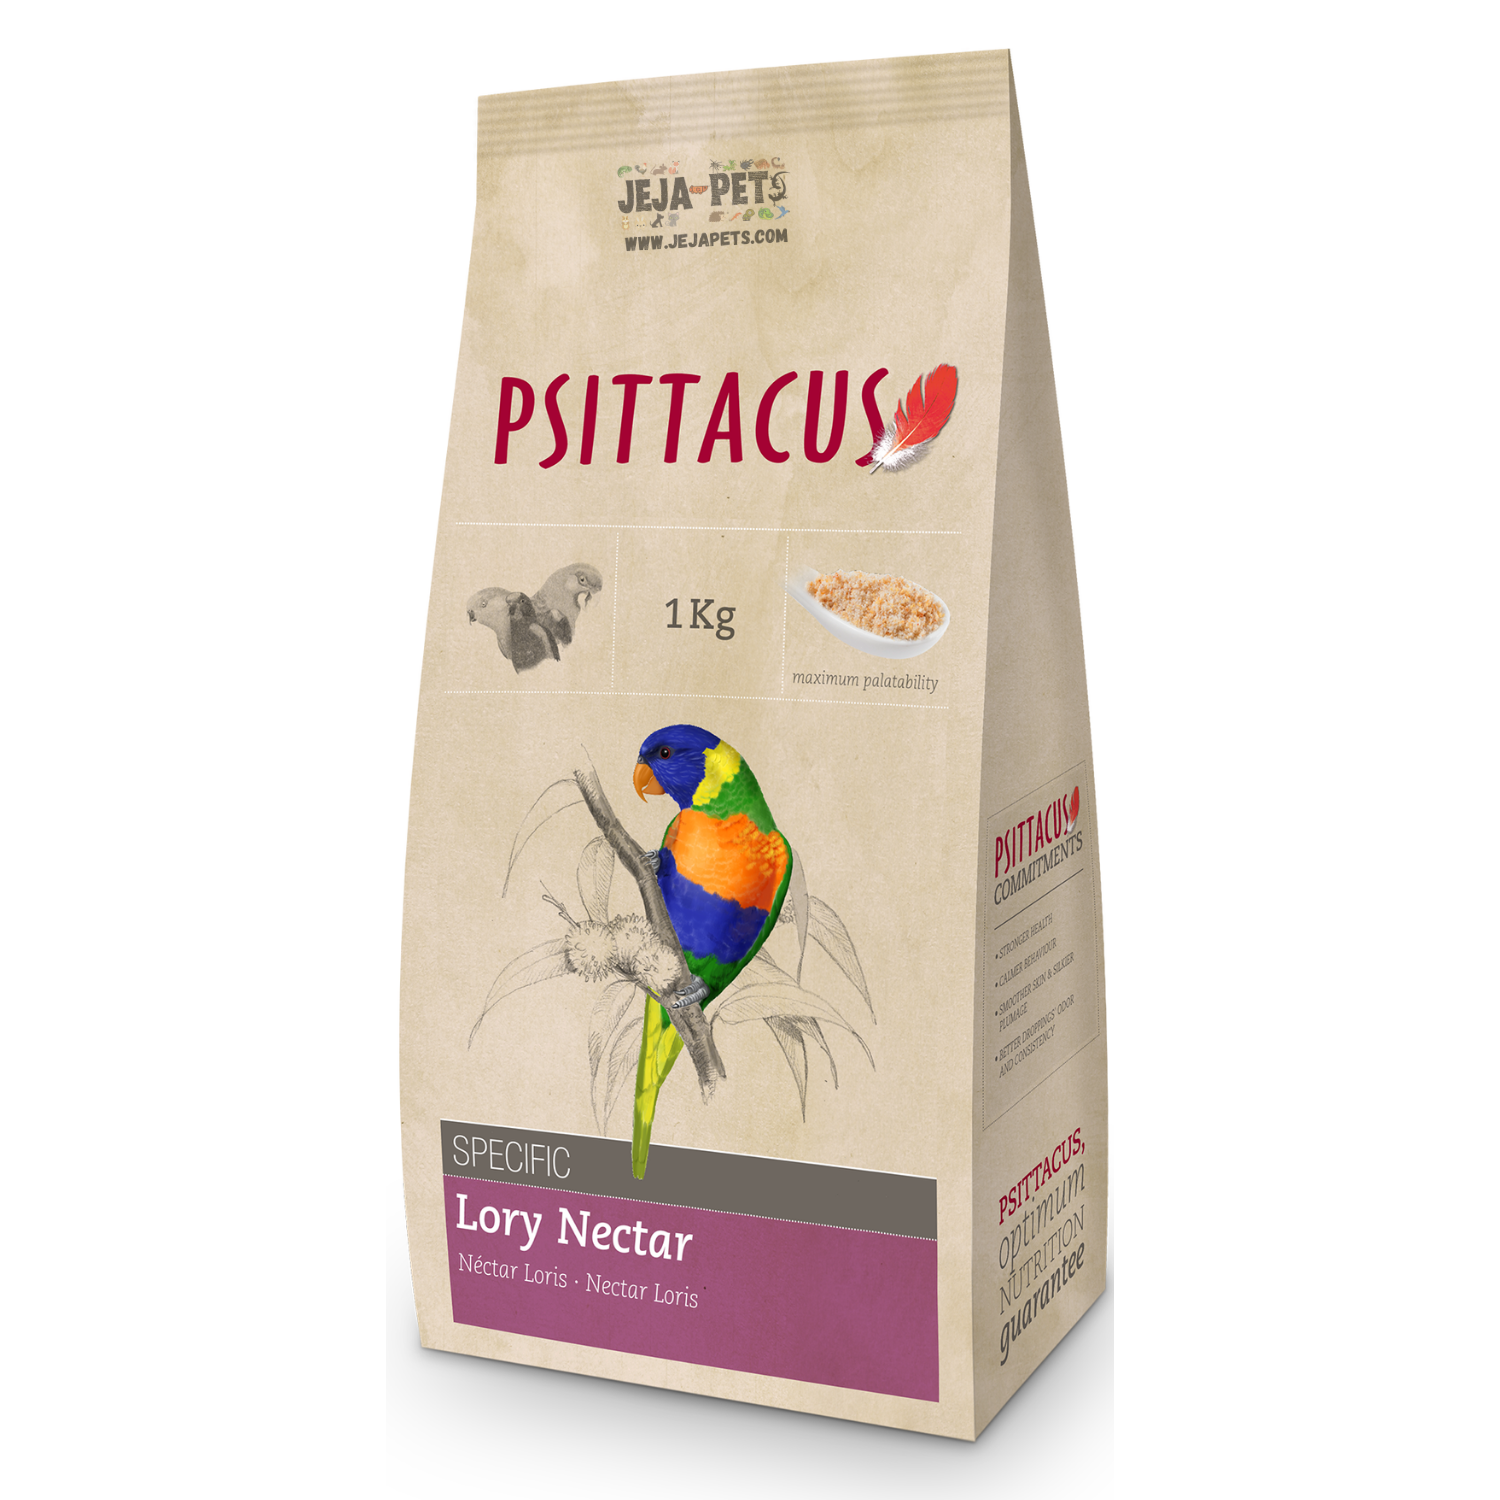 Psittacus Lory Nectar - 1kg / 5kg